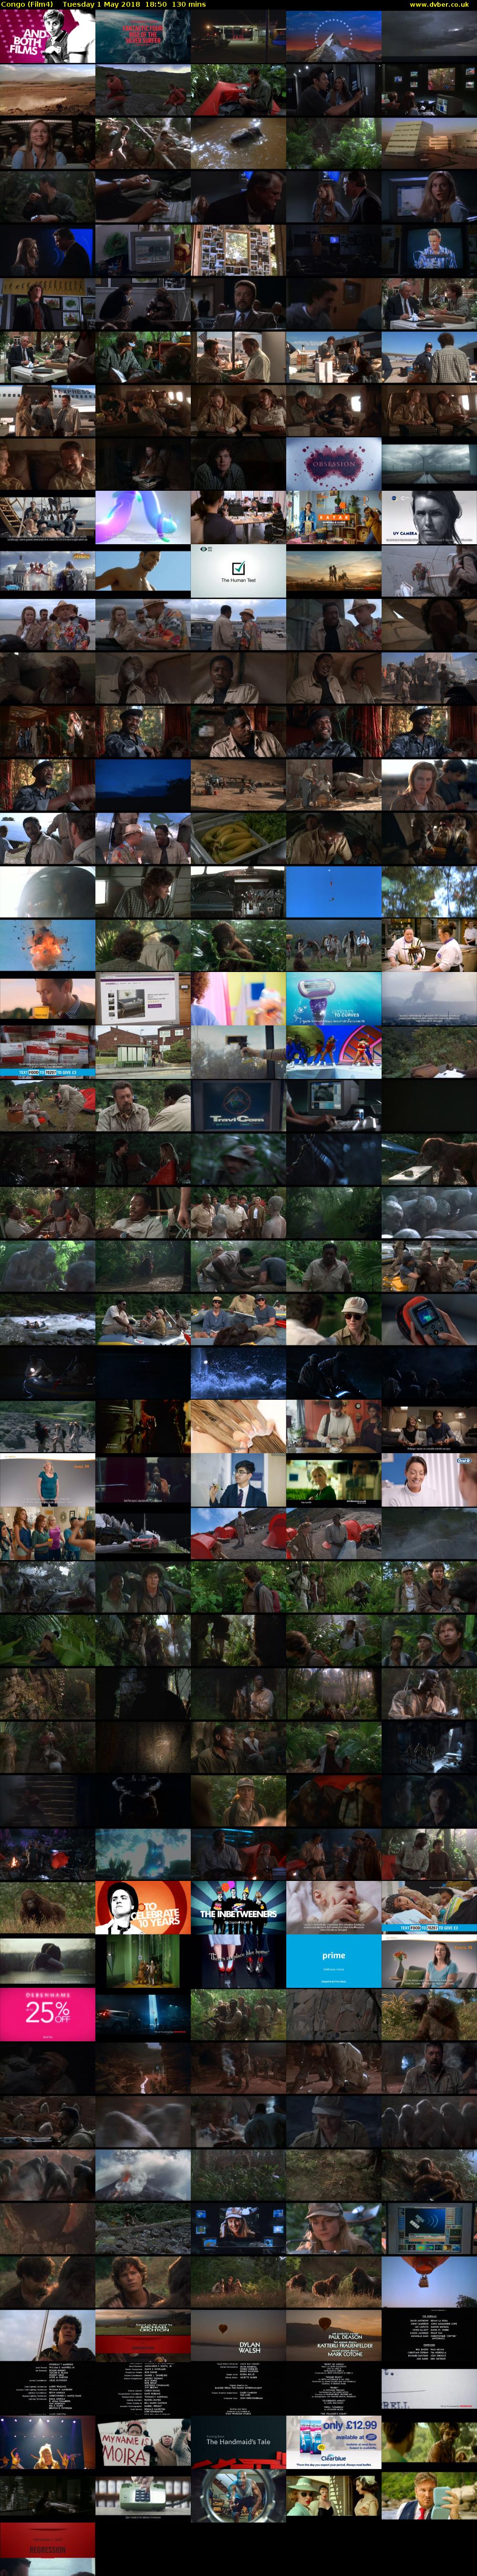 Congo (Film4) Tuesday 1 May 2018 18:50 - 21:00